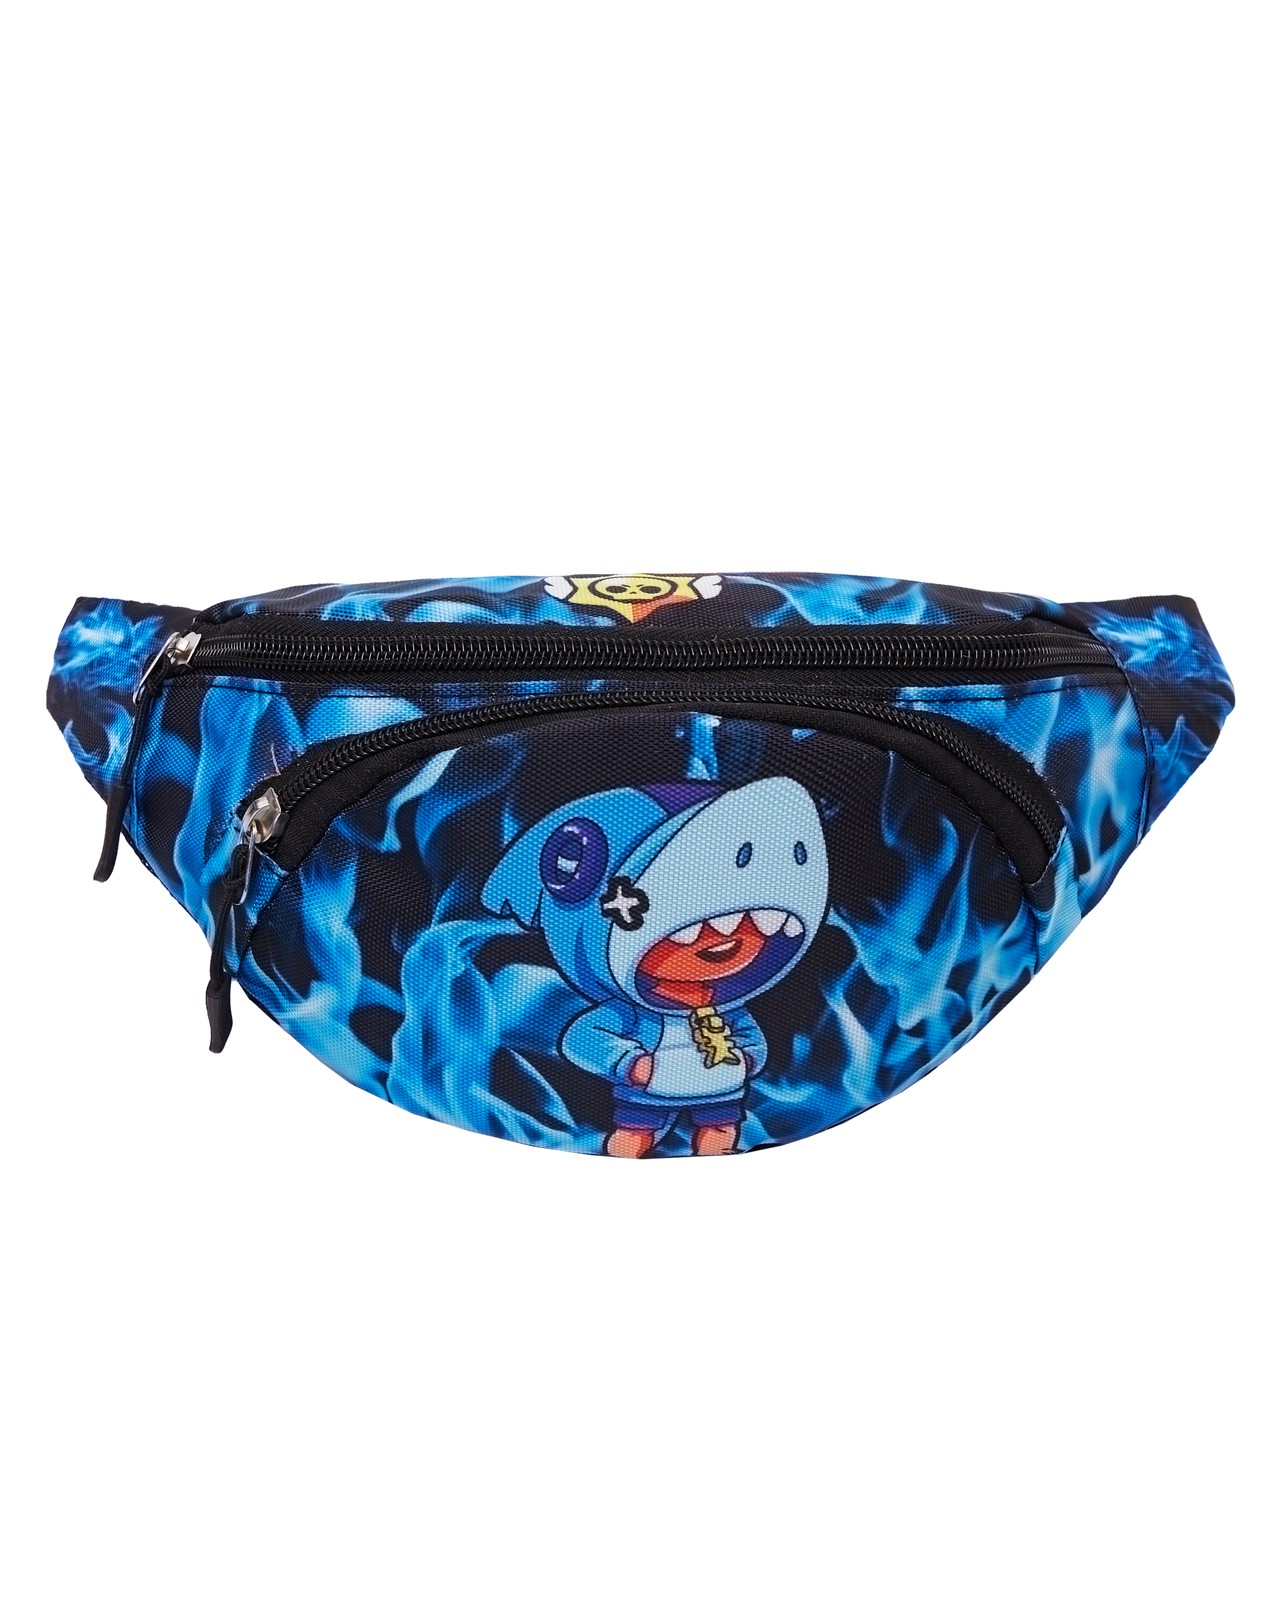 Детская сумка на пояс BAGS-ART Brawl Акула пламя сине-черная